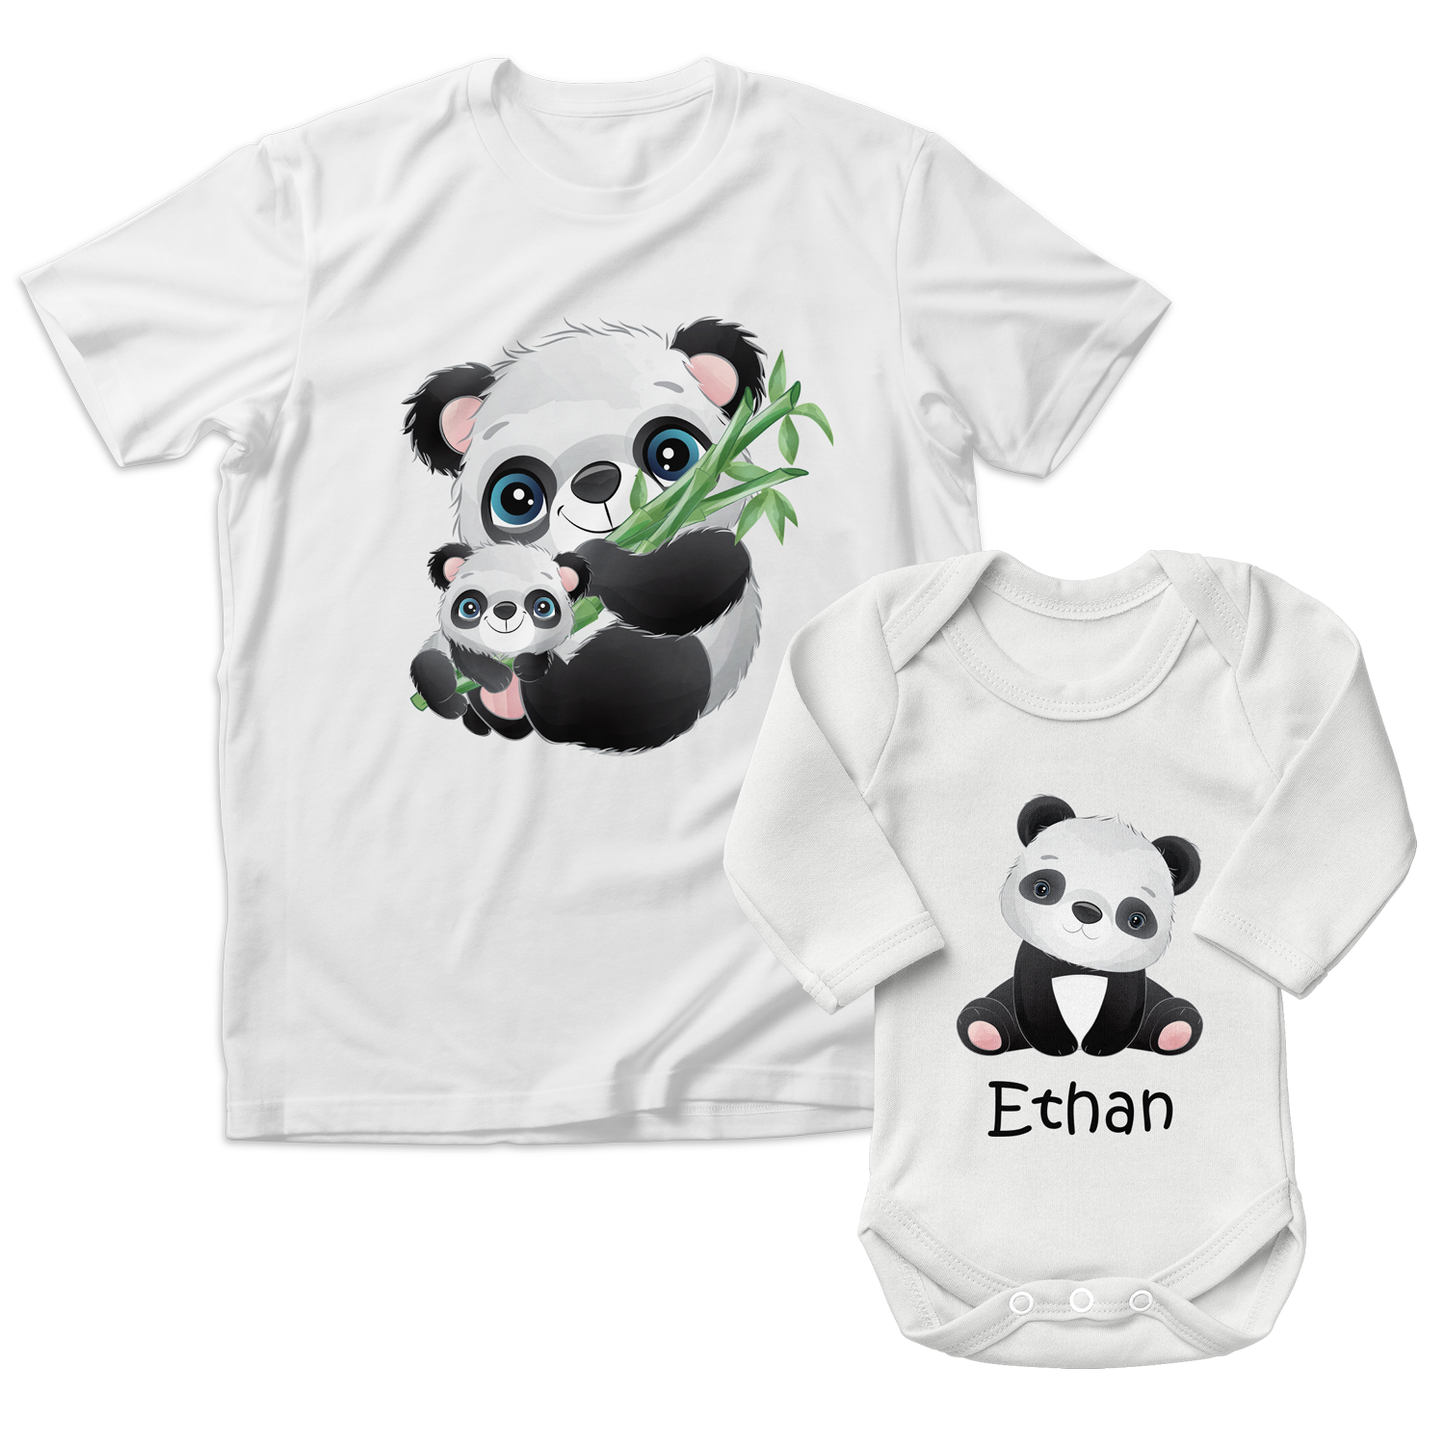 Personalized Matching Mom & Baby Organic Outfits - Panda Family (White)